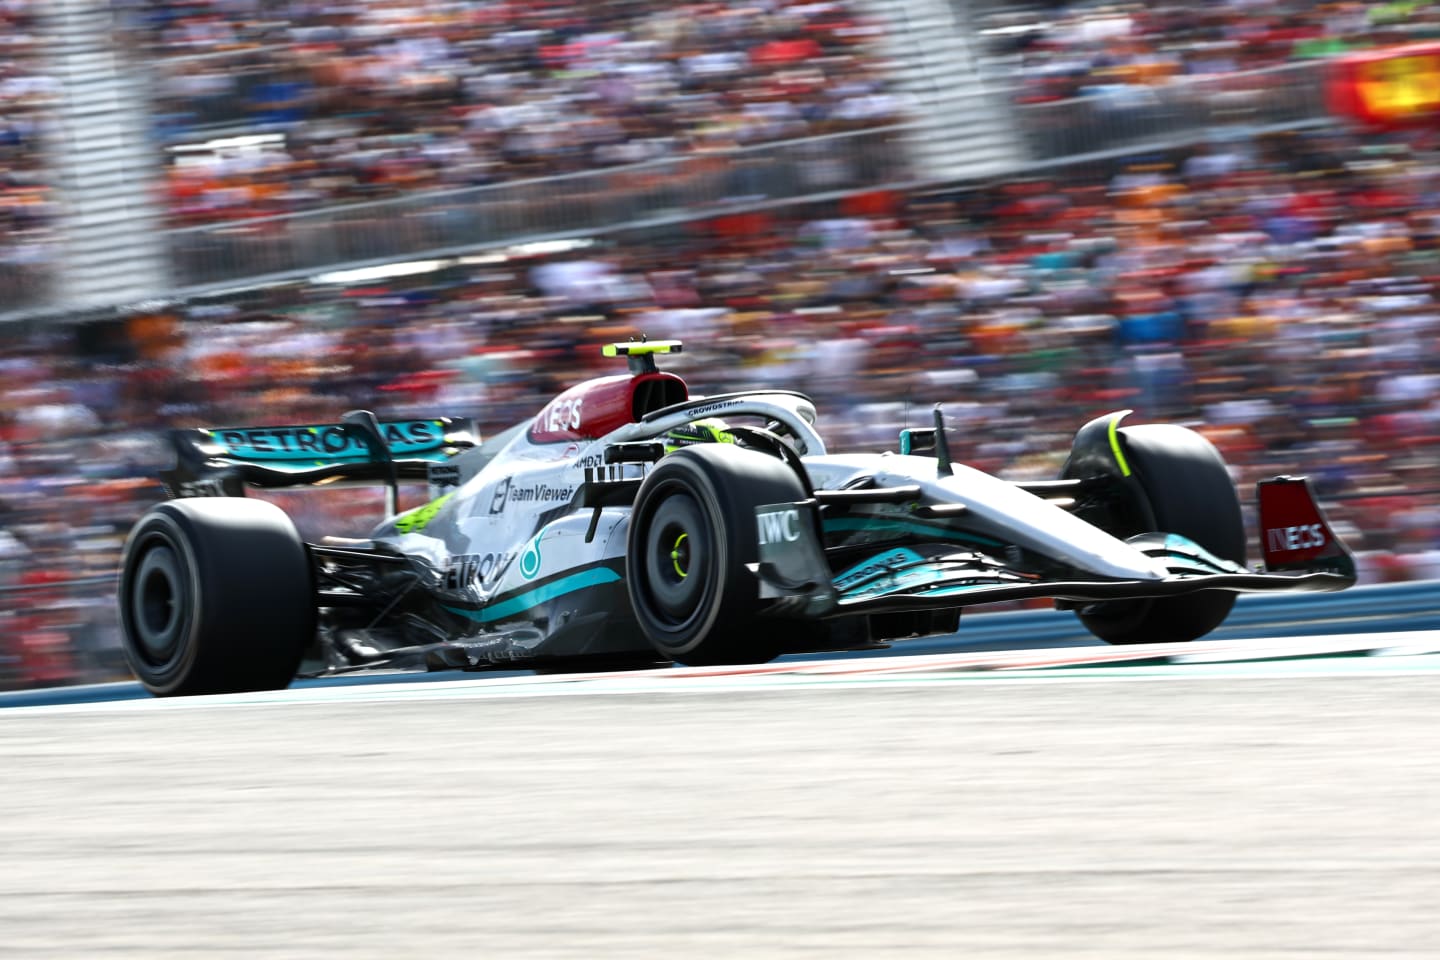 AUSTIN, TEXAS - OCTOBER 23: Lewis Hamilton of Great Britain driving the (44) Mercedes AMG Petronas